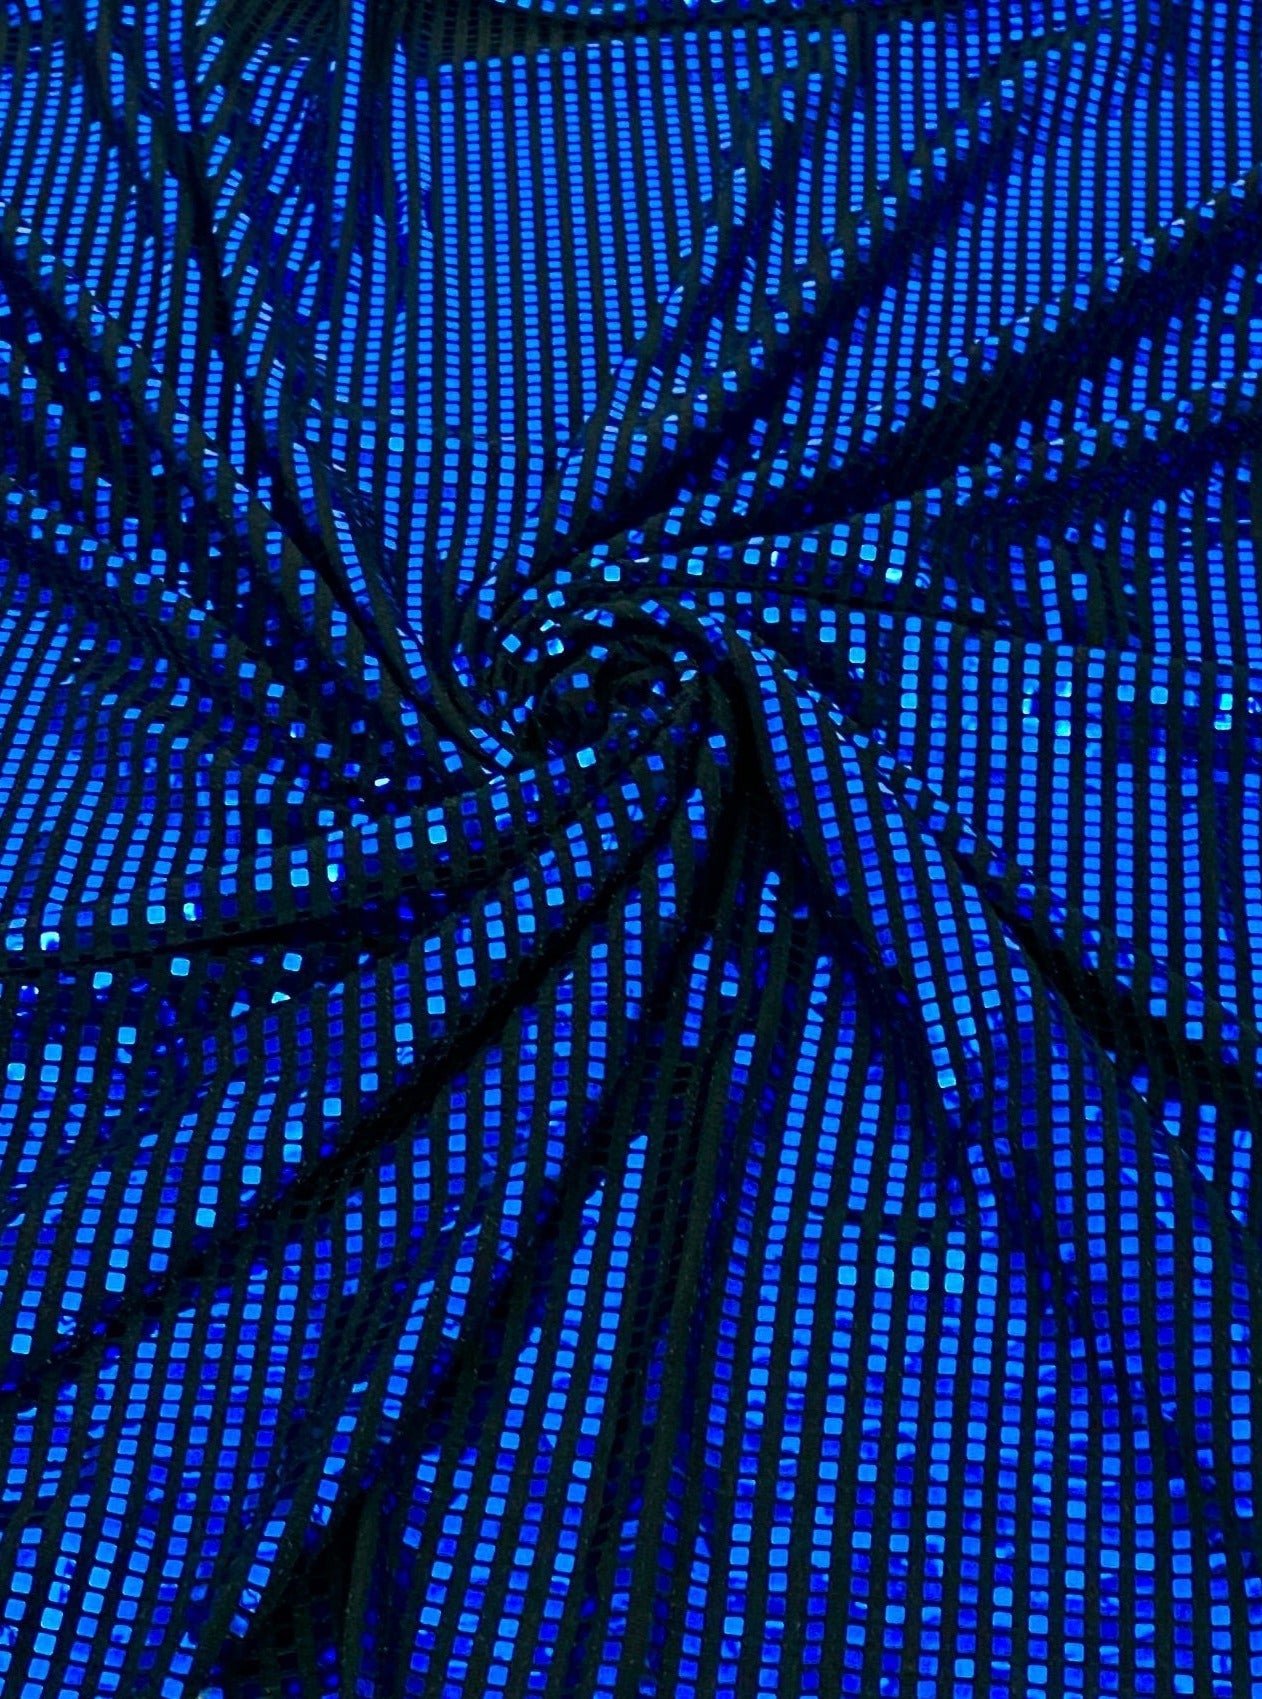 royal blue flat mirror spandex, royal blue foiled sequin fabric, royal blue flat sequin spandex metallic fabric, blue sequin spandex, light blue mirror foiled sequin spandex, dark blue mirror foiled sequin spandex, aqua blue mirror foiled sequin spandex, ocean blue mirror foiled sequin spandex, premium mirror foiled sequin spandex, mirror foiled sequin spandex for woman